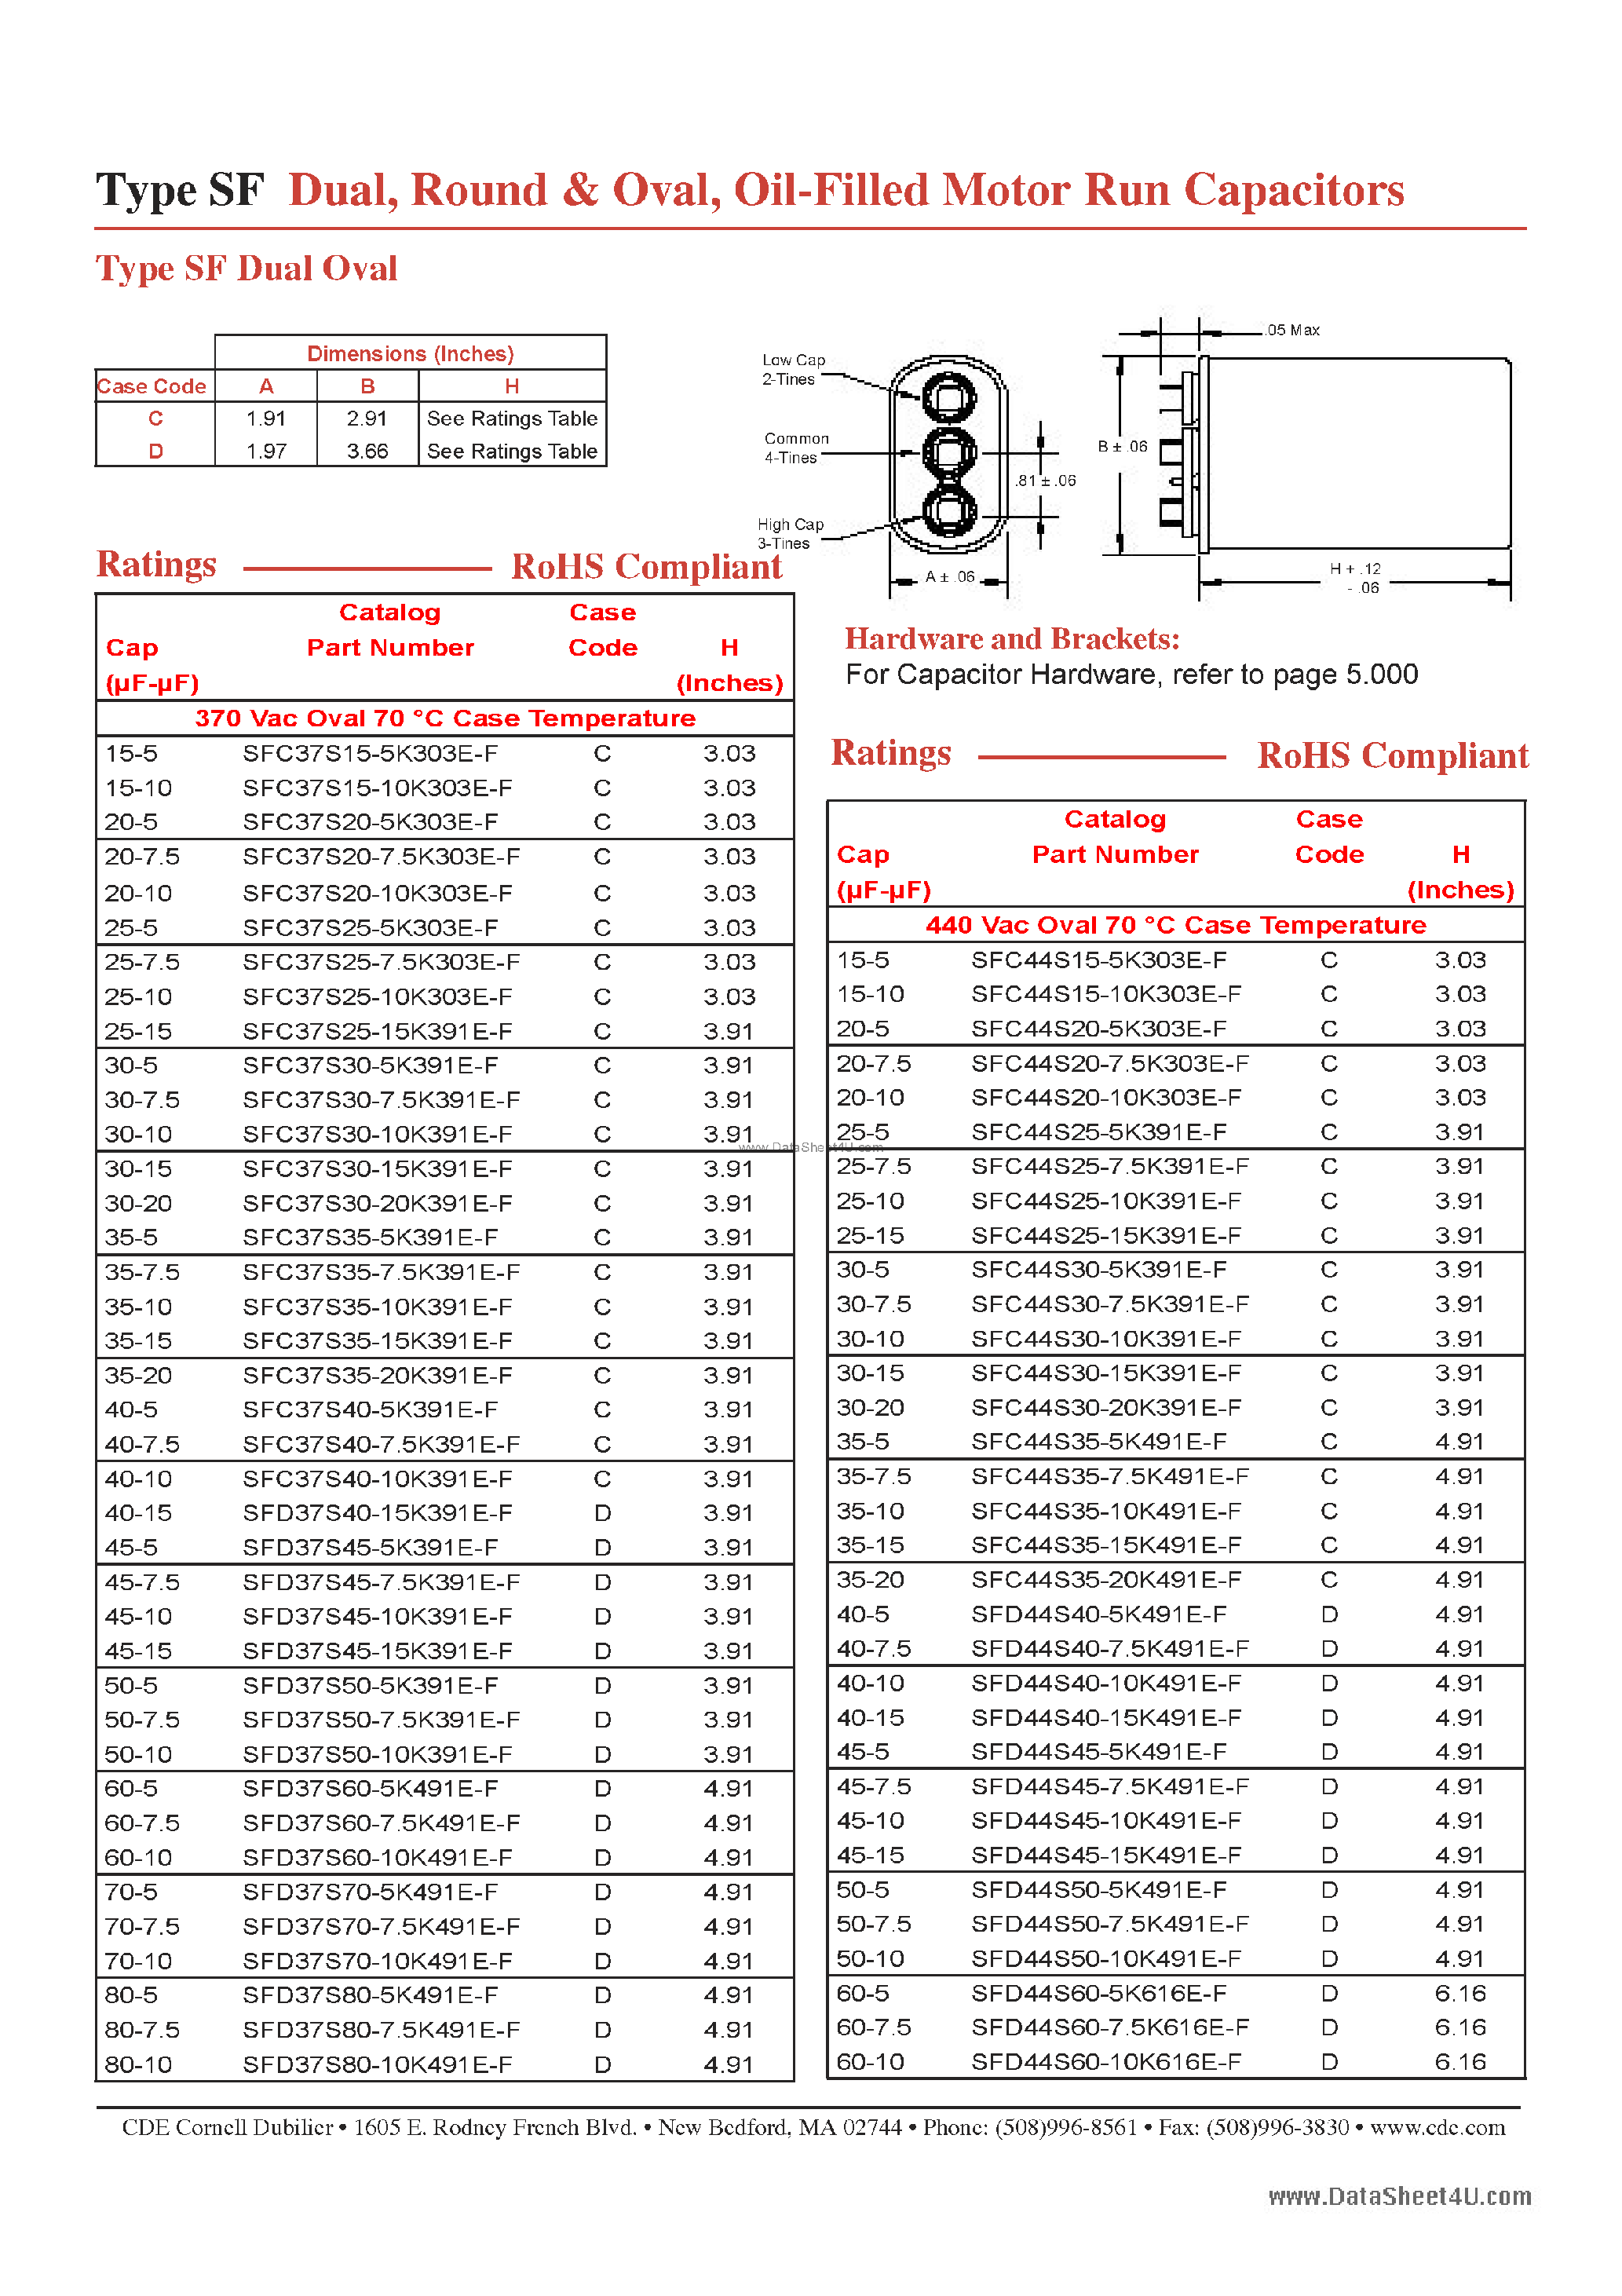 Даташит SFC37S35-xxxxxE-F - (SFC Type) Iol-Filled Motor Run Capacitors страница 1